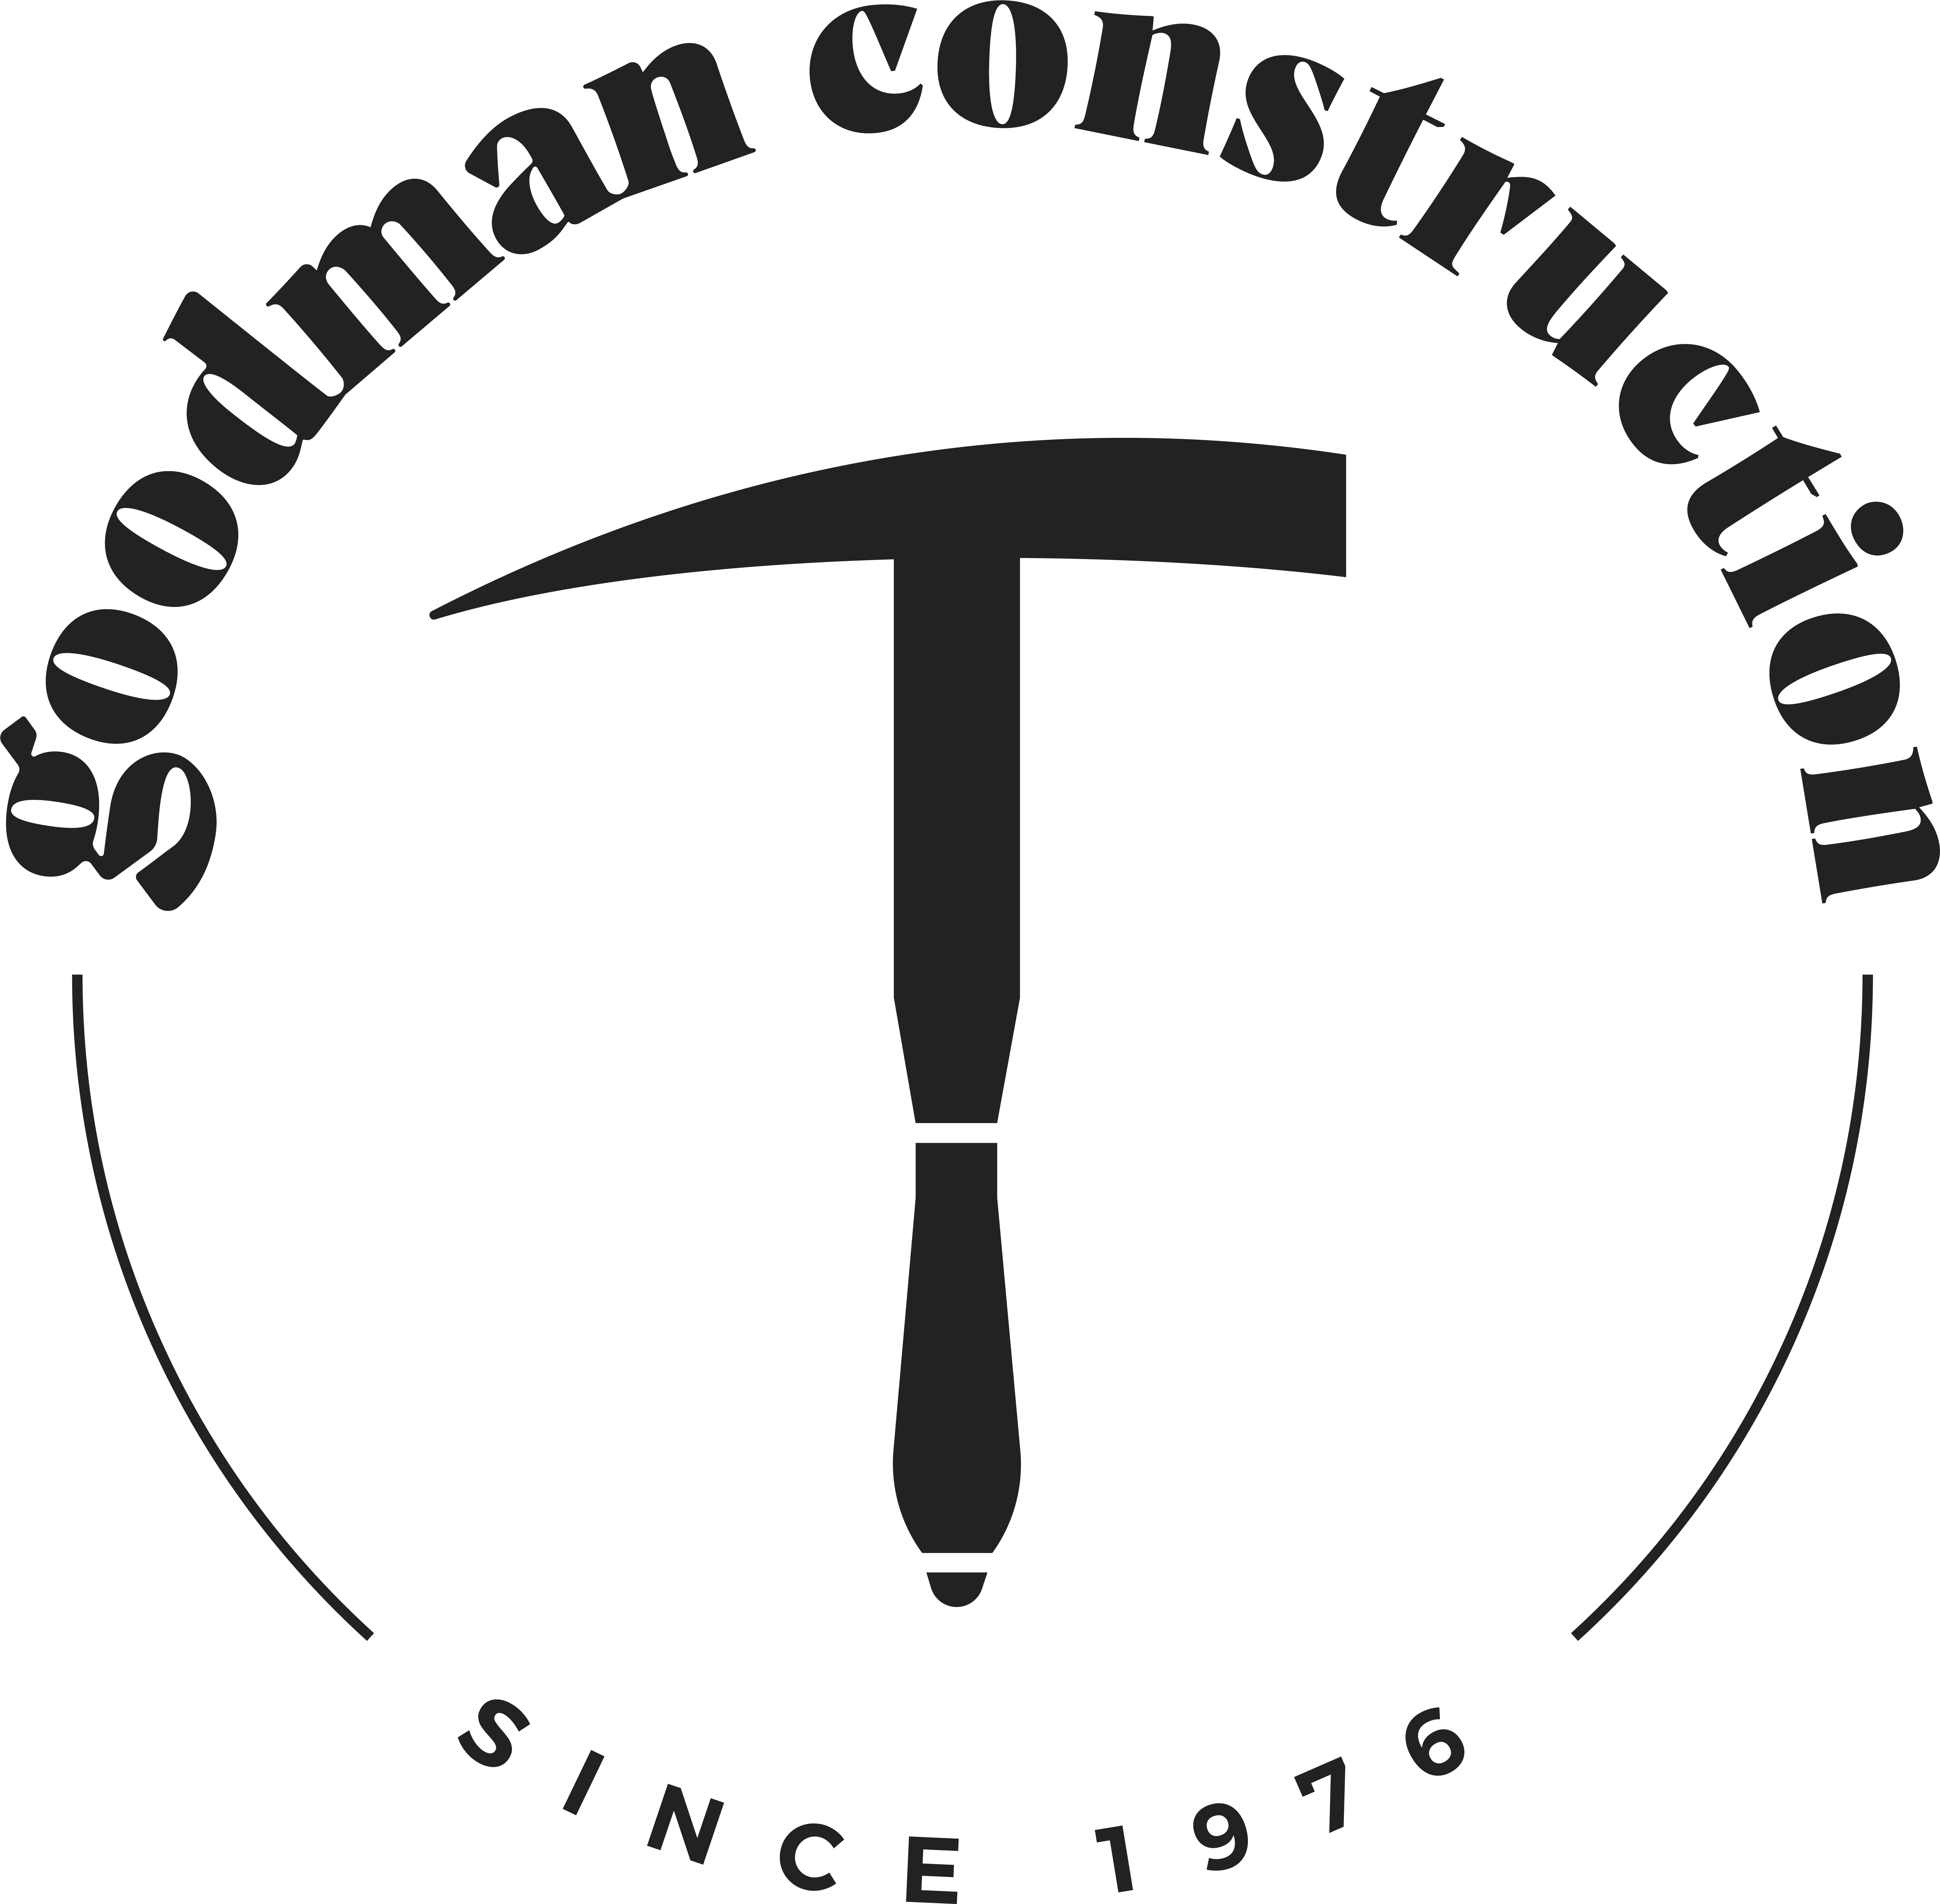 Goodman Construction, LLC Logo